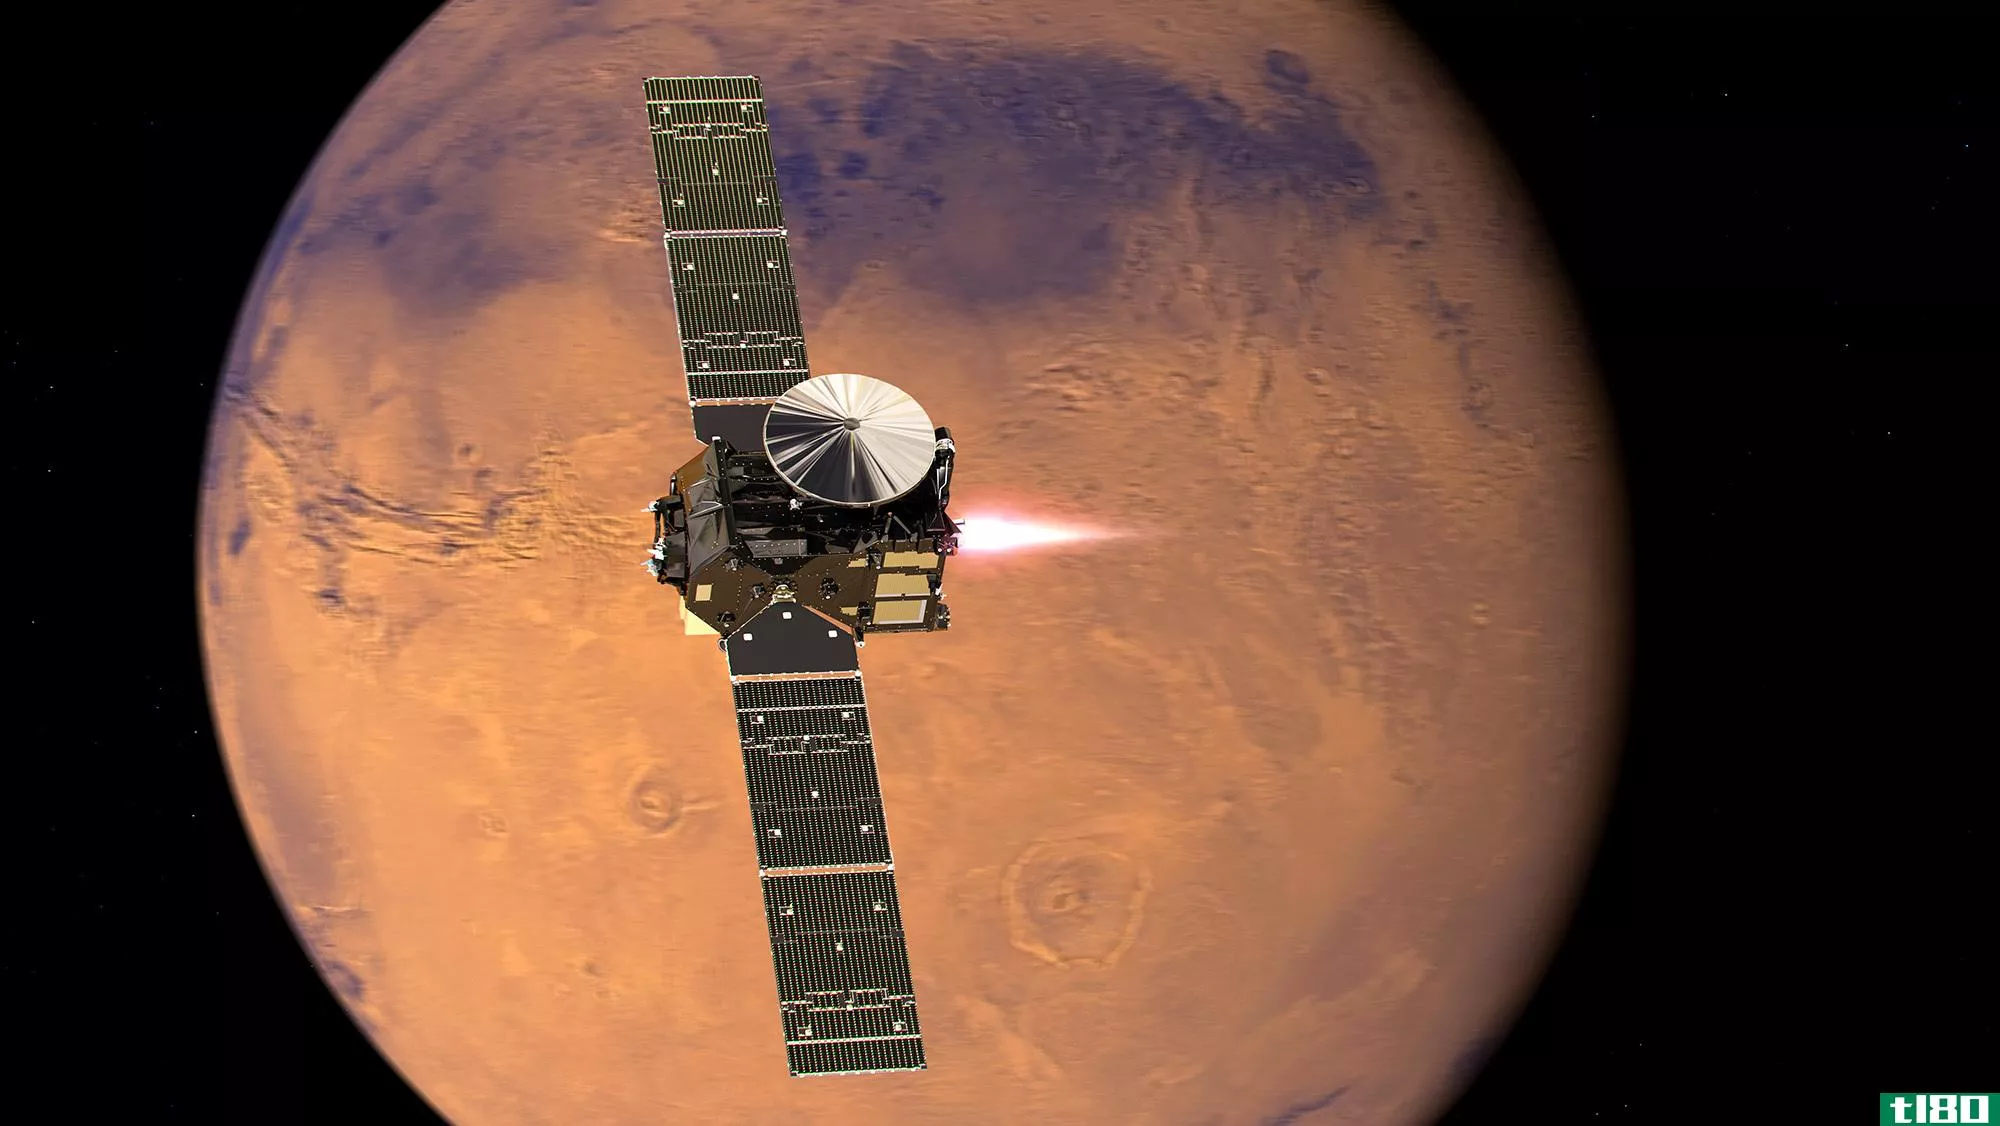 exomars太空船将如何到达火星表面